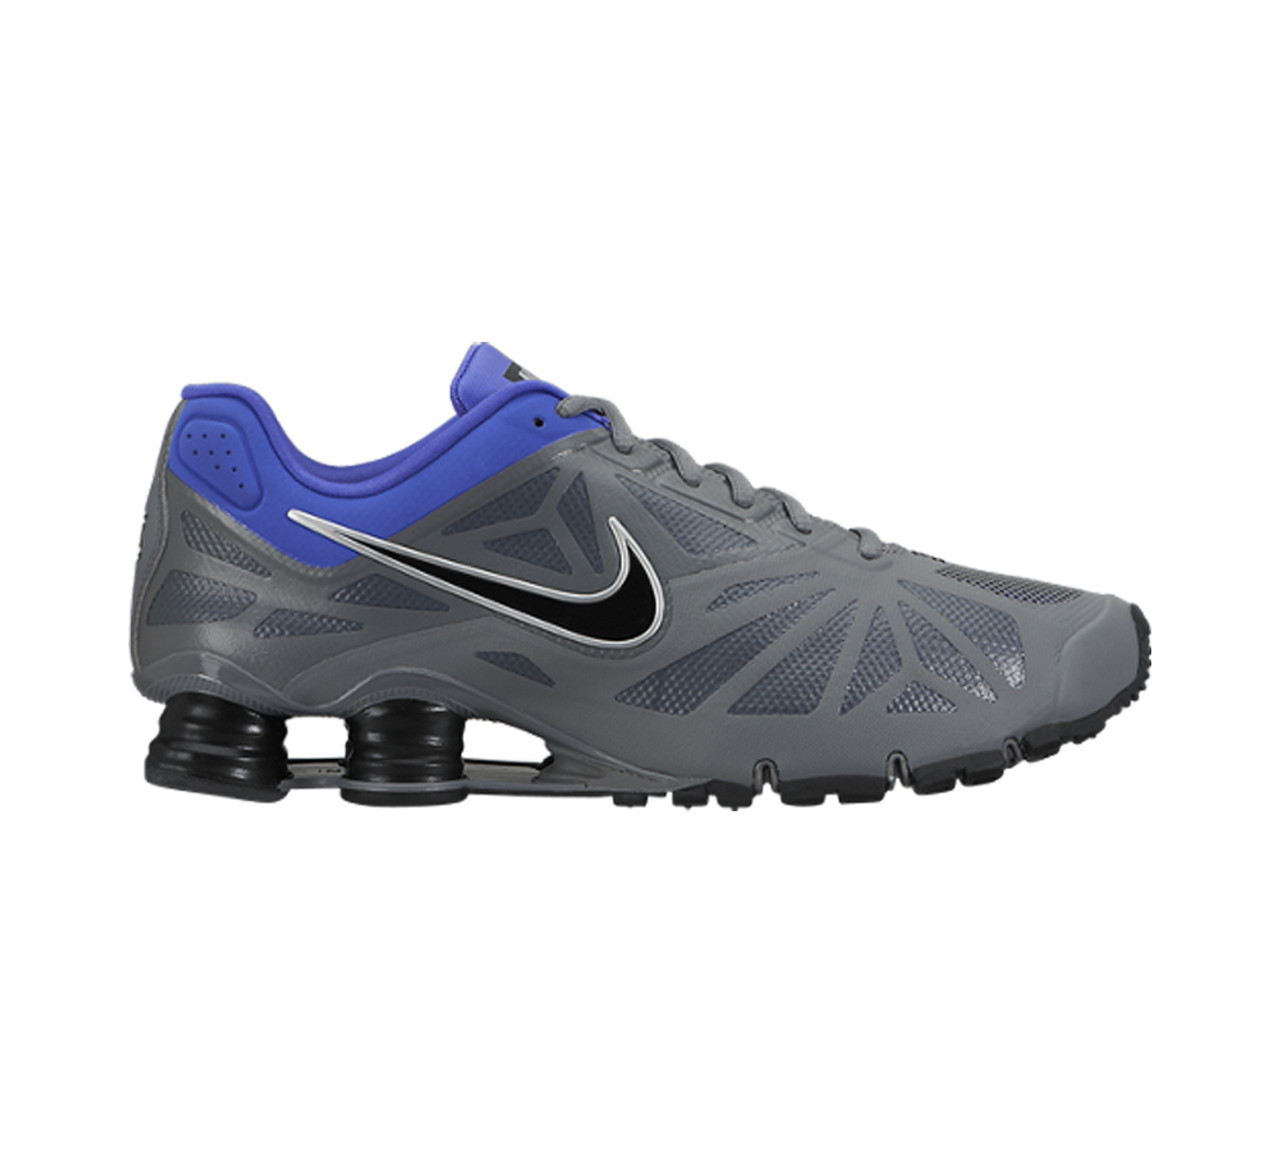 banco Banco Pato Nike Men's Shox Turbo 14 Running Shoe - Grey | Discount Nike Men's Athletic  & More - Shoolu.com | Shoolu.com